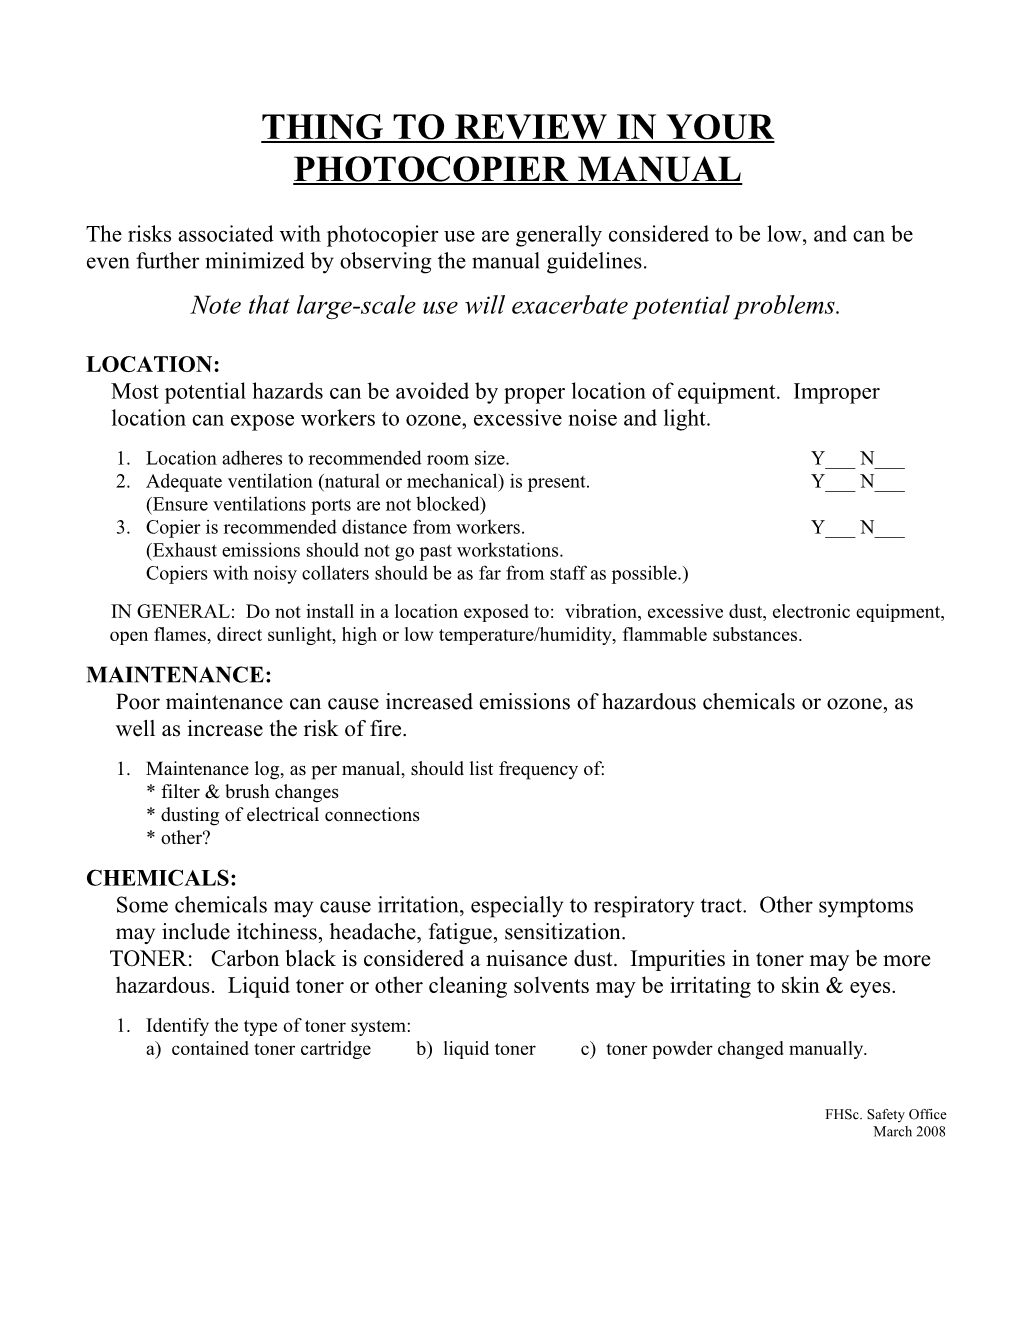 Photocopier Safety Information